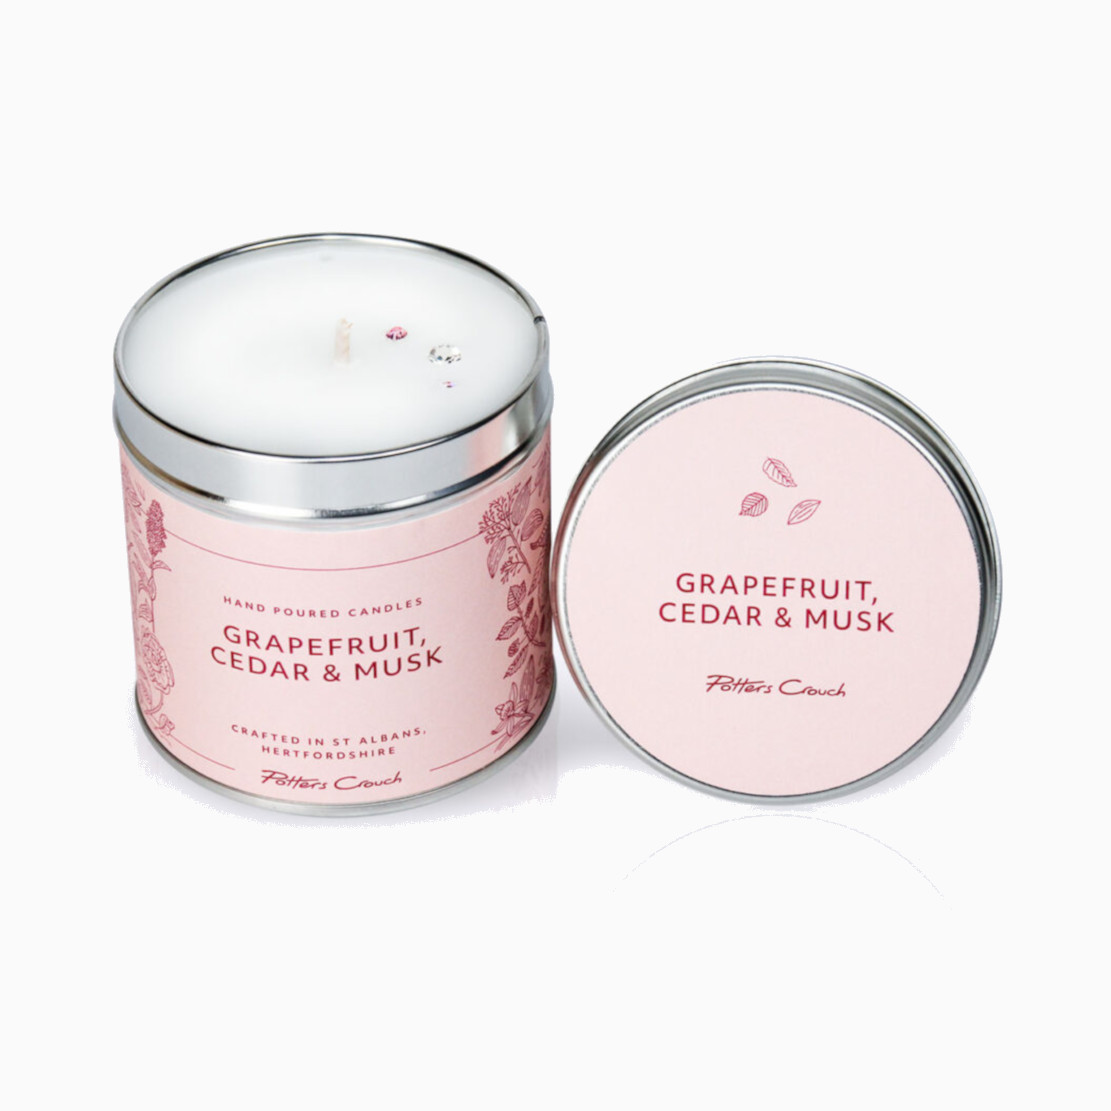 Potters Crouch Grapefruit Cedar & Musk Wellness Candle